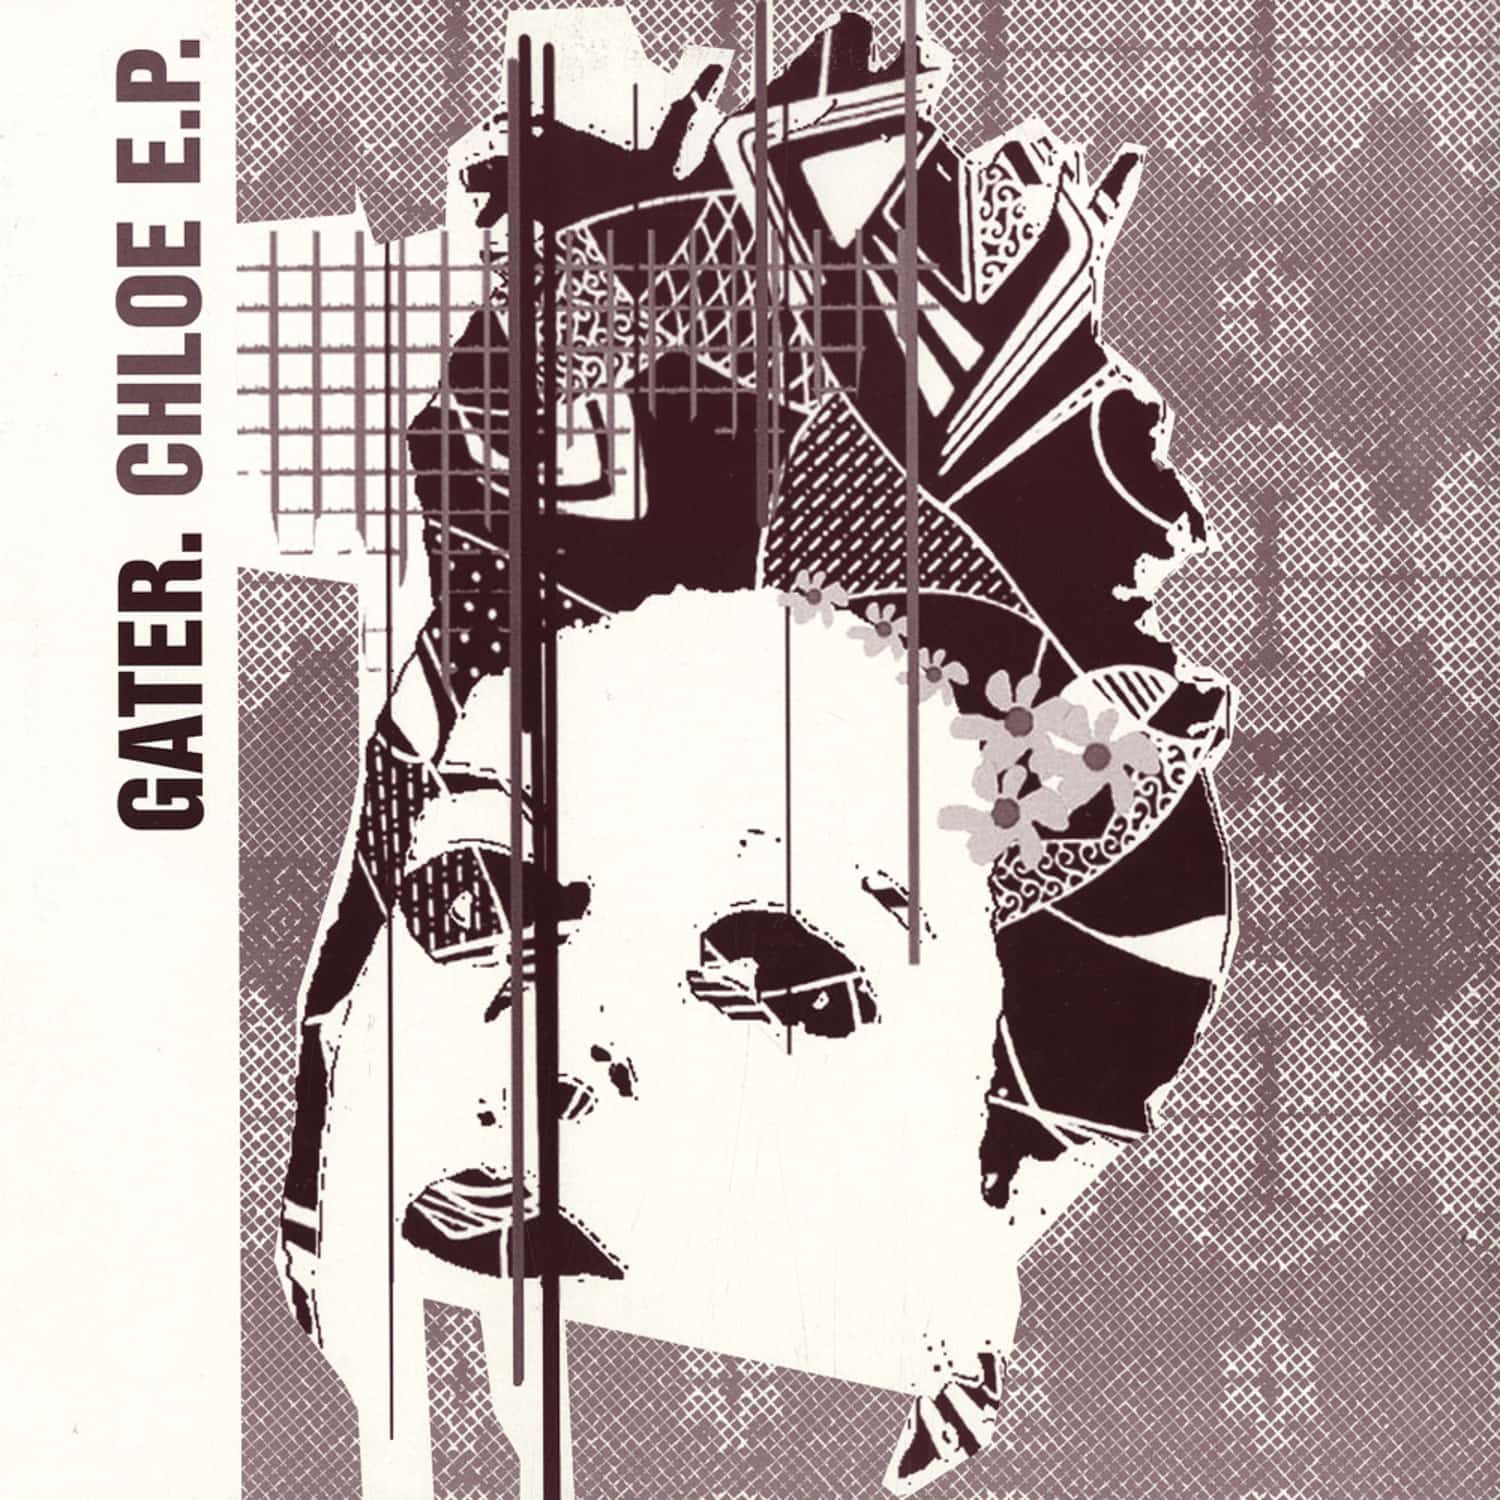 Gater - CHLOE EP